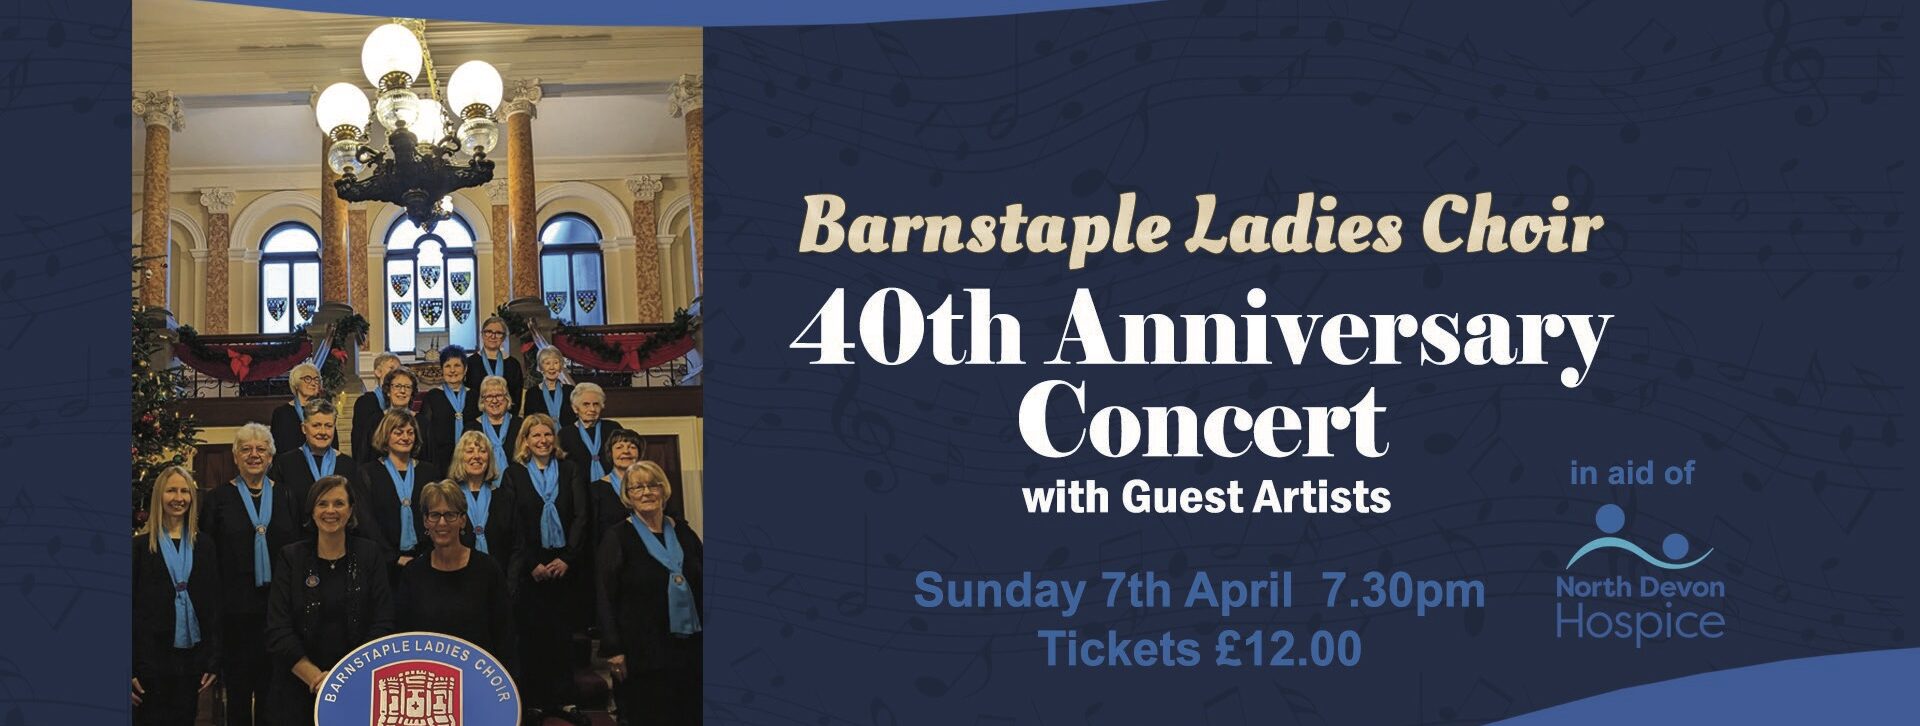 Barnstaple Ladies Choir 40th Anniversary Concert